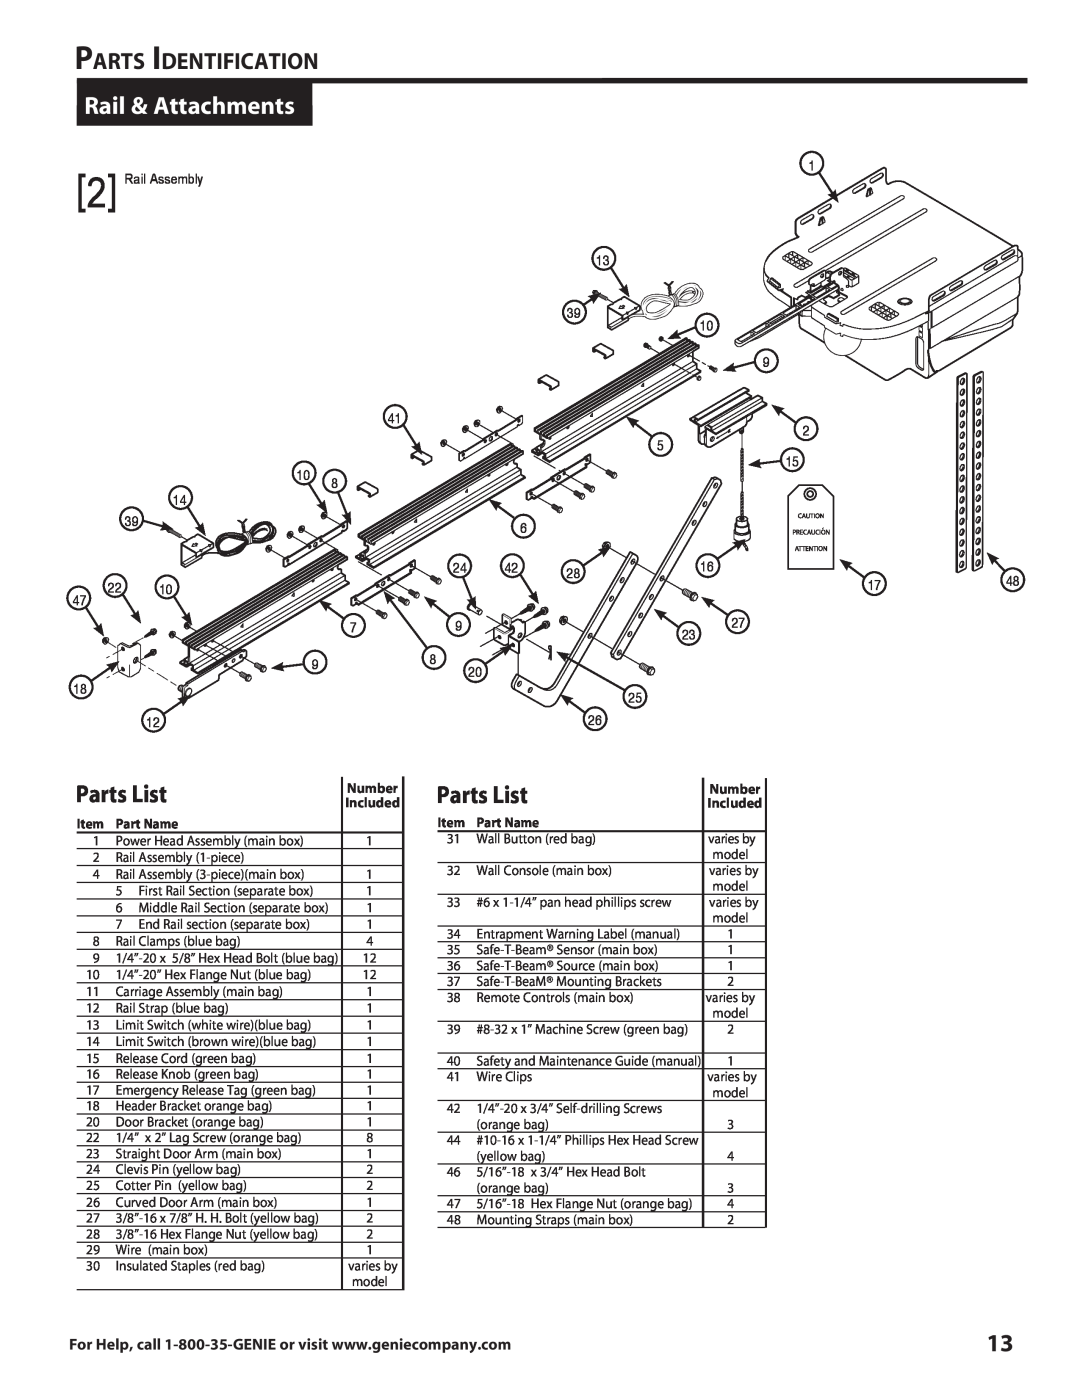 Genie 3681036666 warranty Rail & Attachments, Parts List, Parts Identification, Part Name 